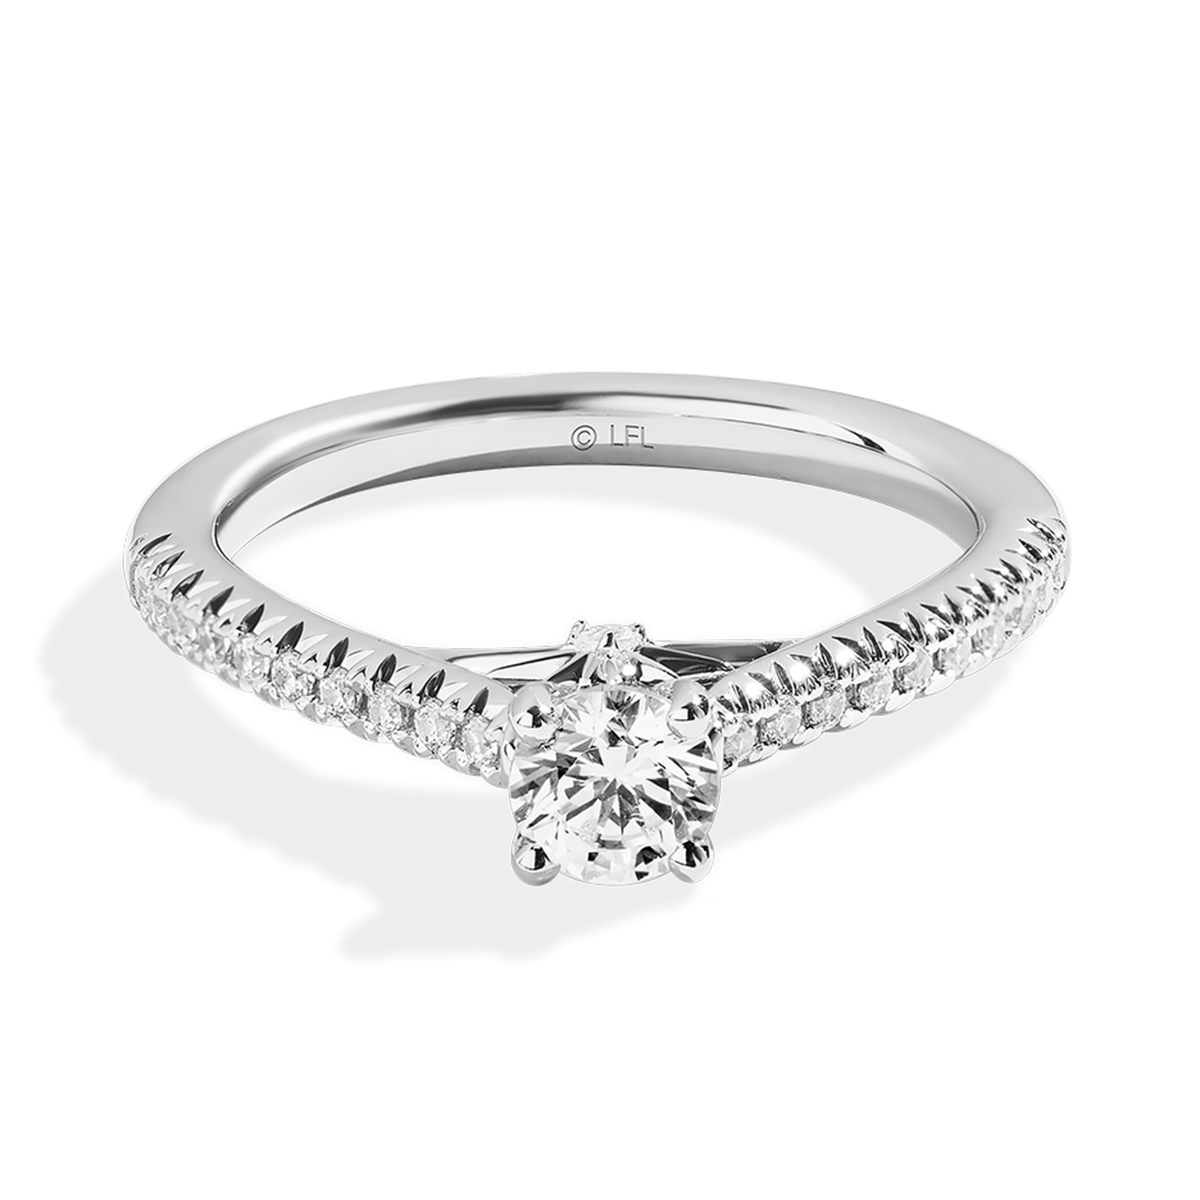 Diamond Wish 18k White Gold 1 5/8ct Garnet and 9/10ct TDW Diamond Halo Engagement  Ring, Size 5 | Amazon.com